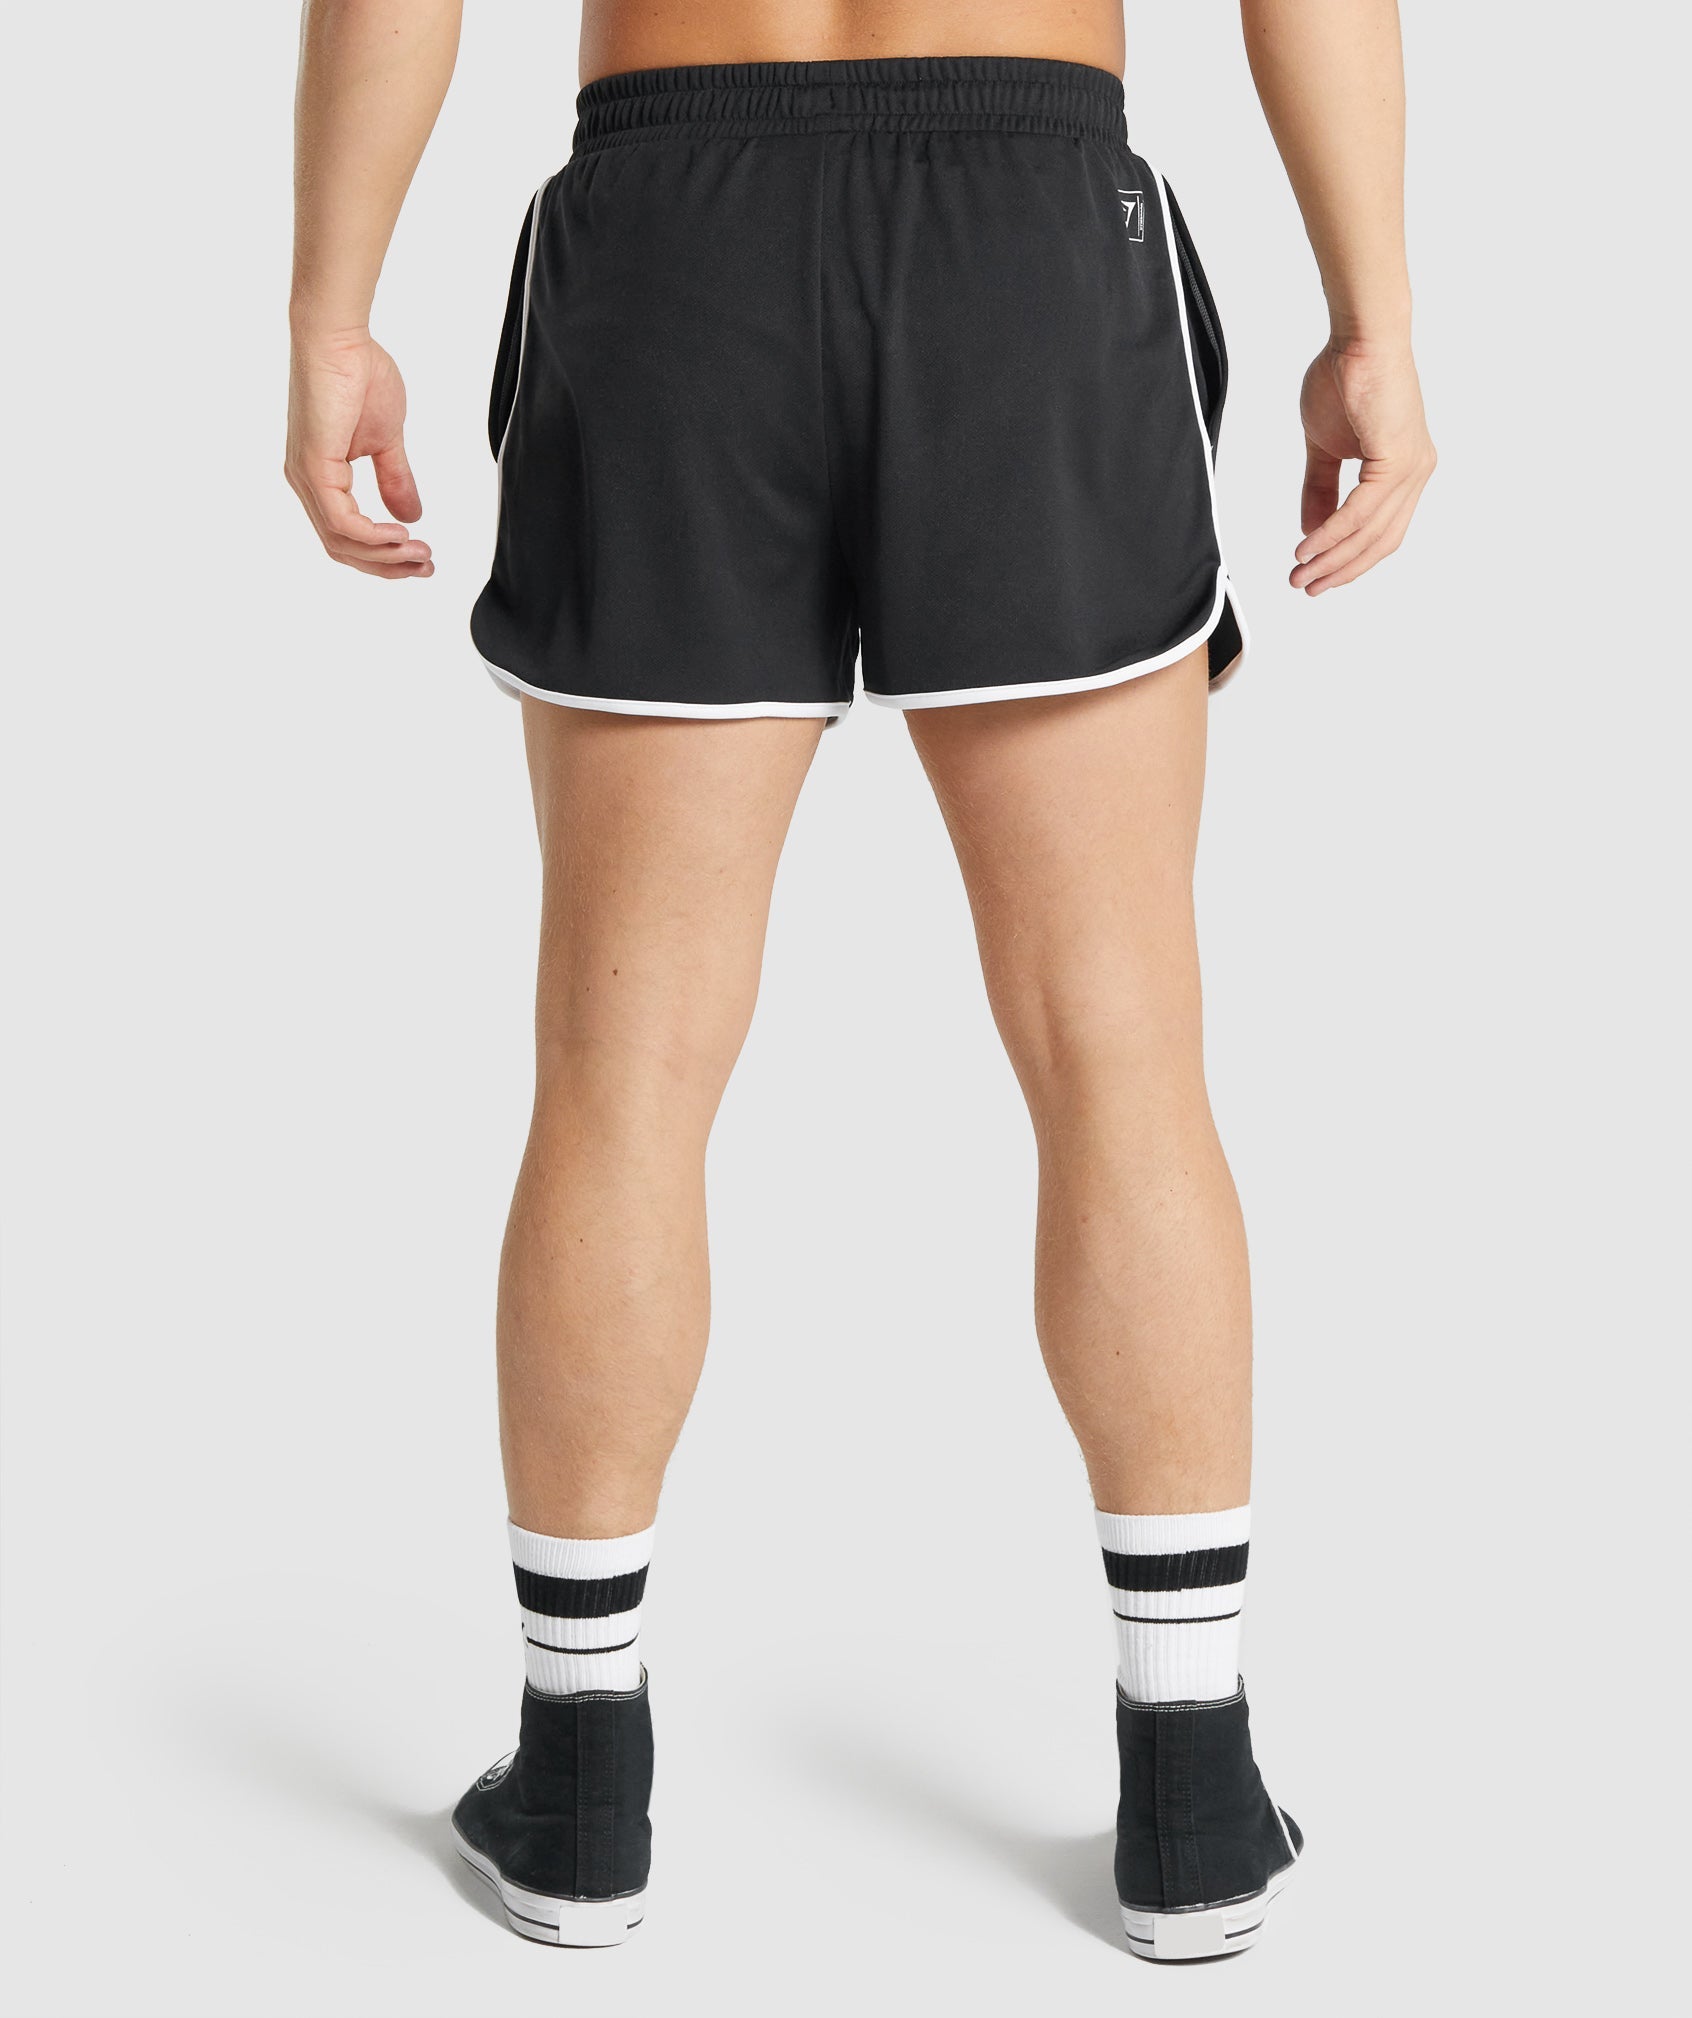 Recess 3" Quad Shorts in Black - view 3